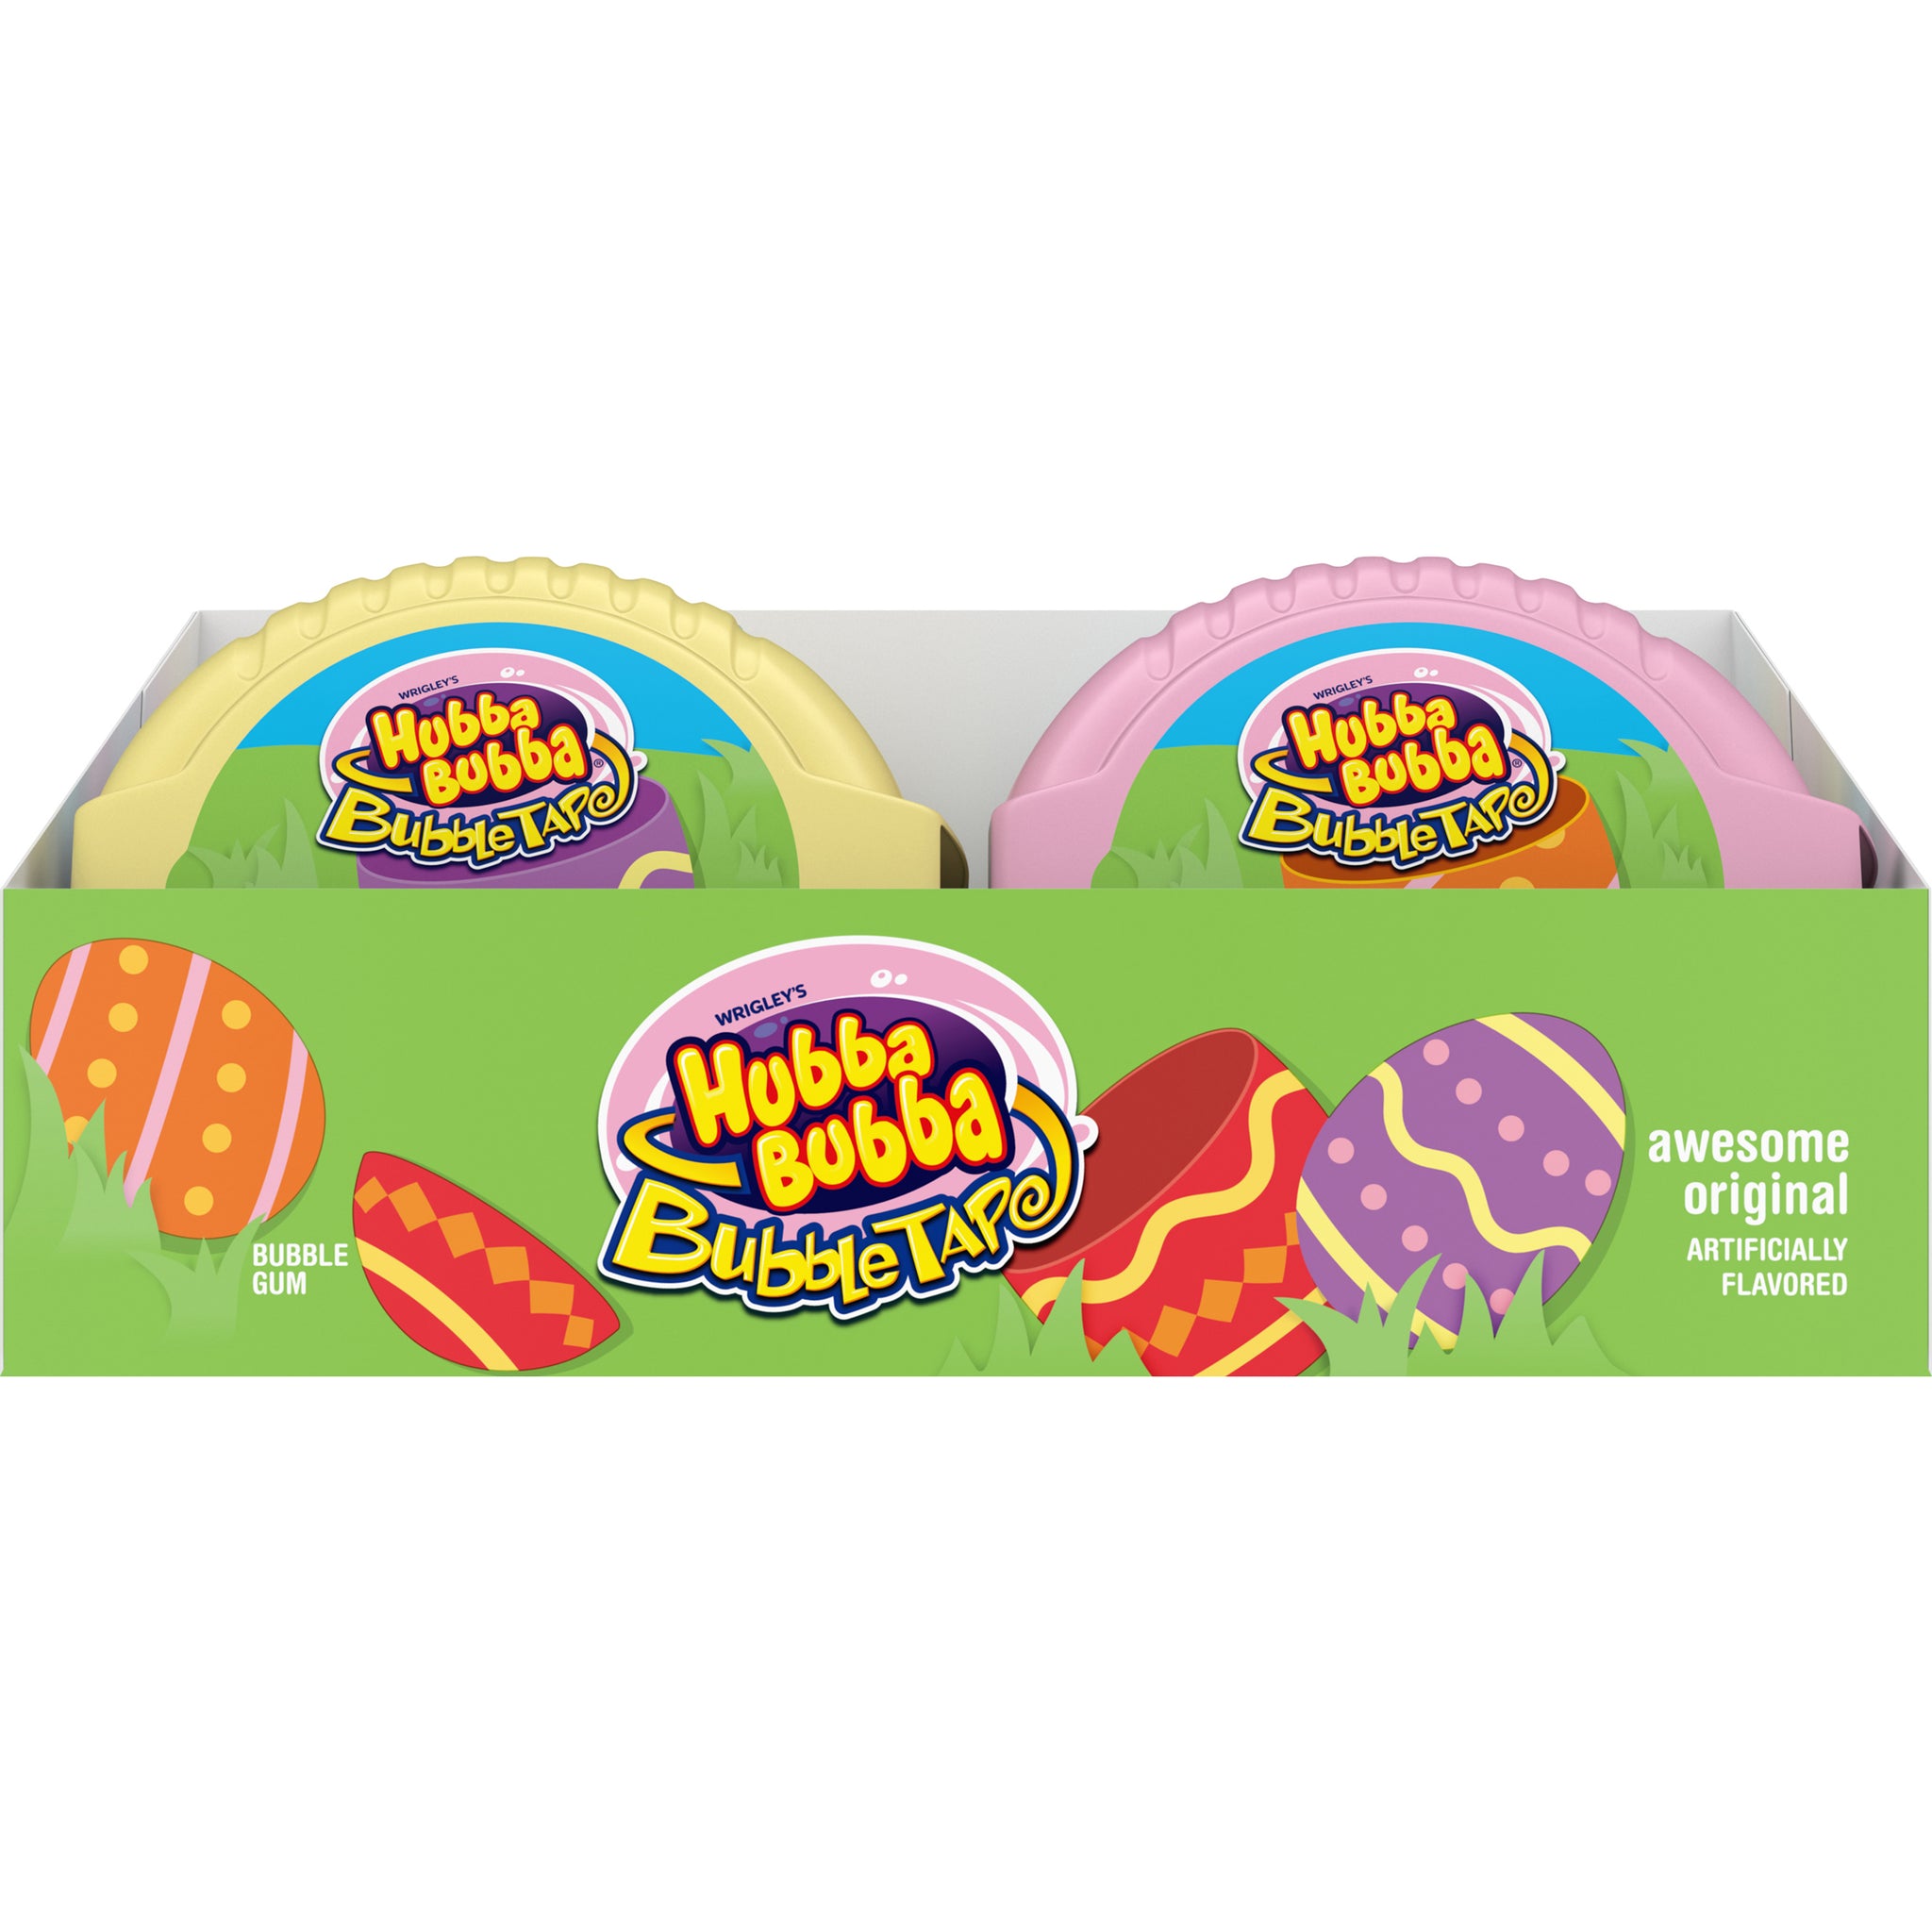 Hubba Bubba Easter Bunny Bubble Gum Tape 3 pack 18 foot long! Hubbabubba